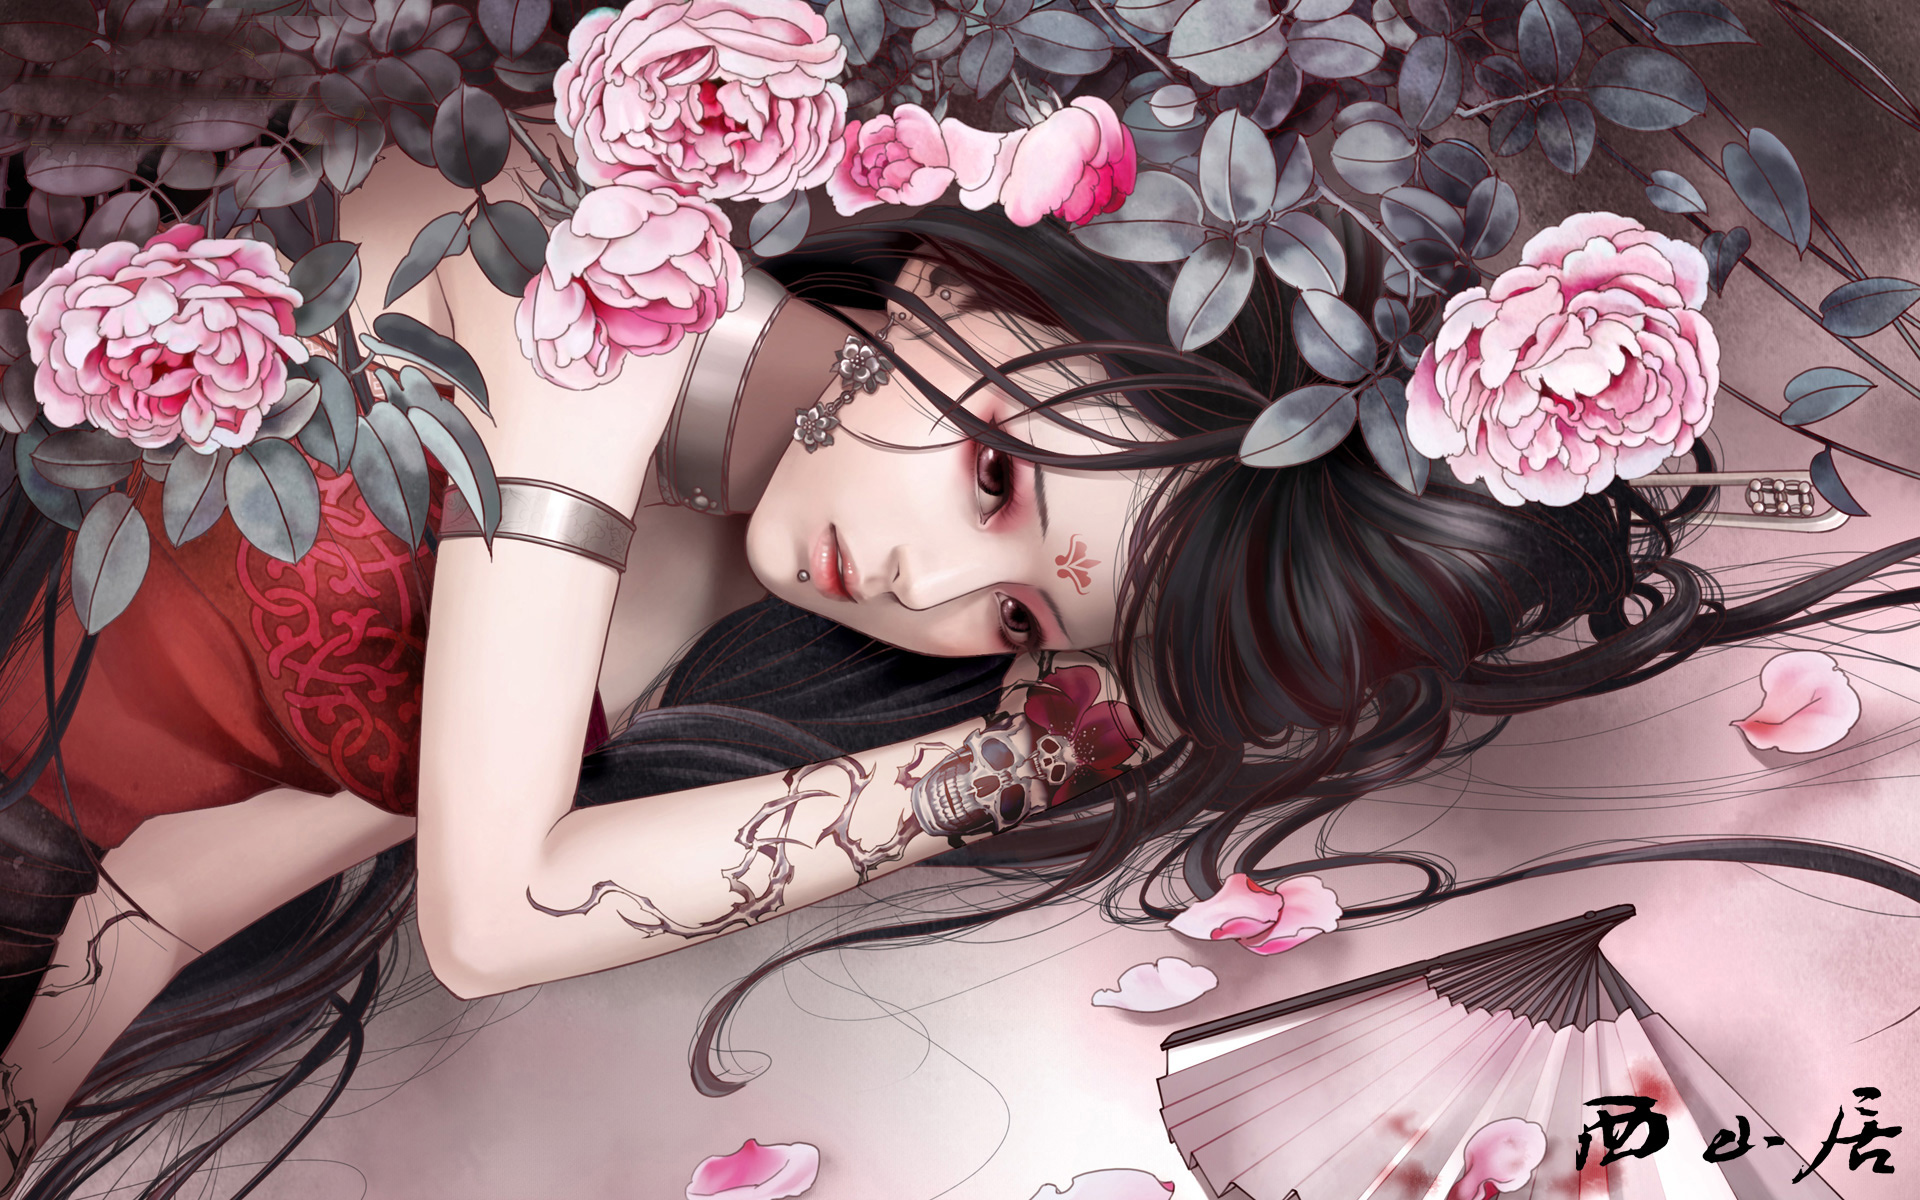 Asian Fan Fantasy Girl Lying Down Pink Rose Rose Skull Tattoo Woman 1920x1200